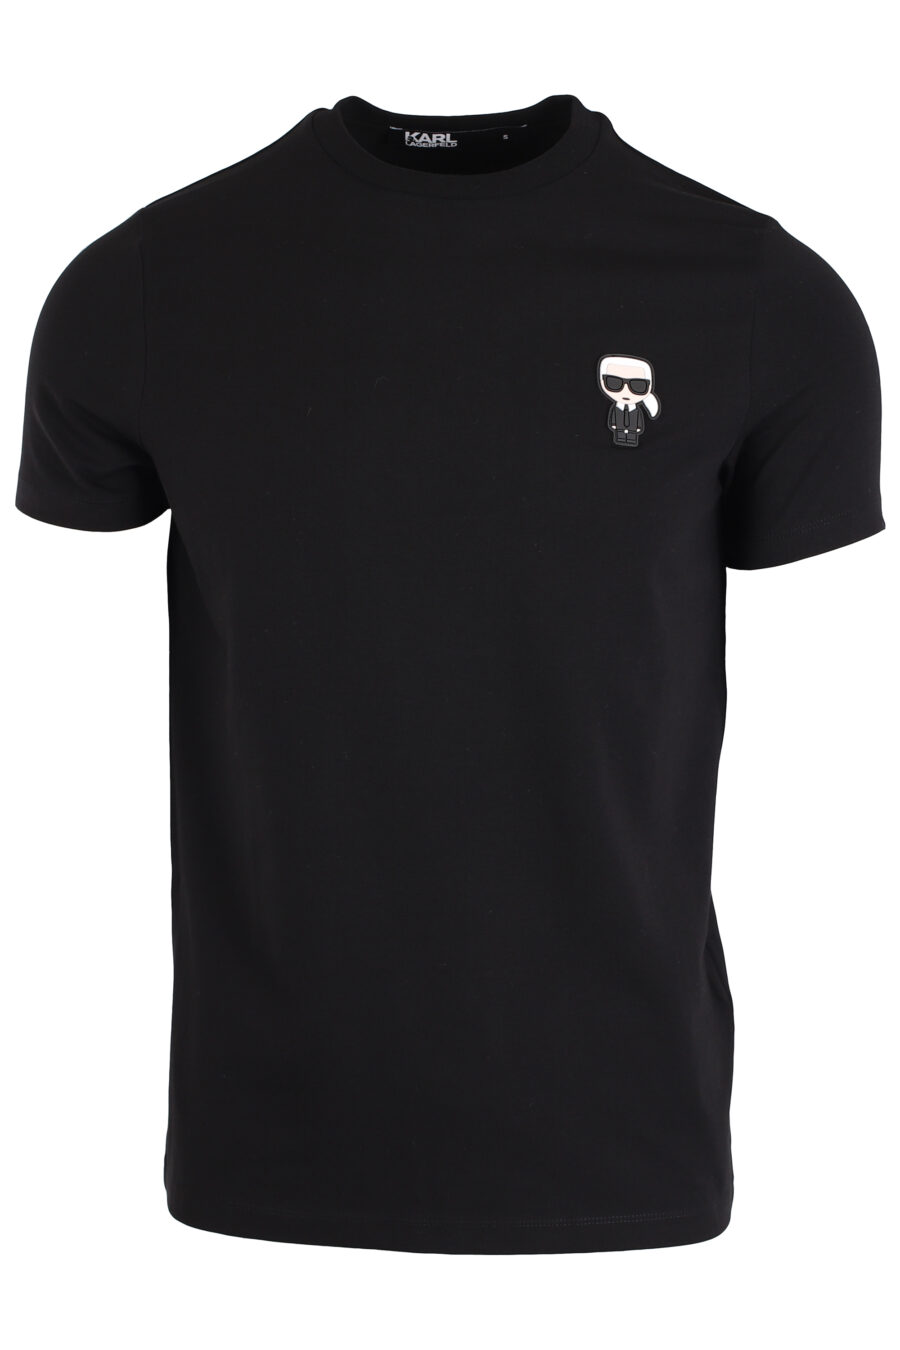 T-shirt preta com o logótipo "ikonik" - IMG 3976